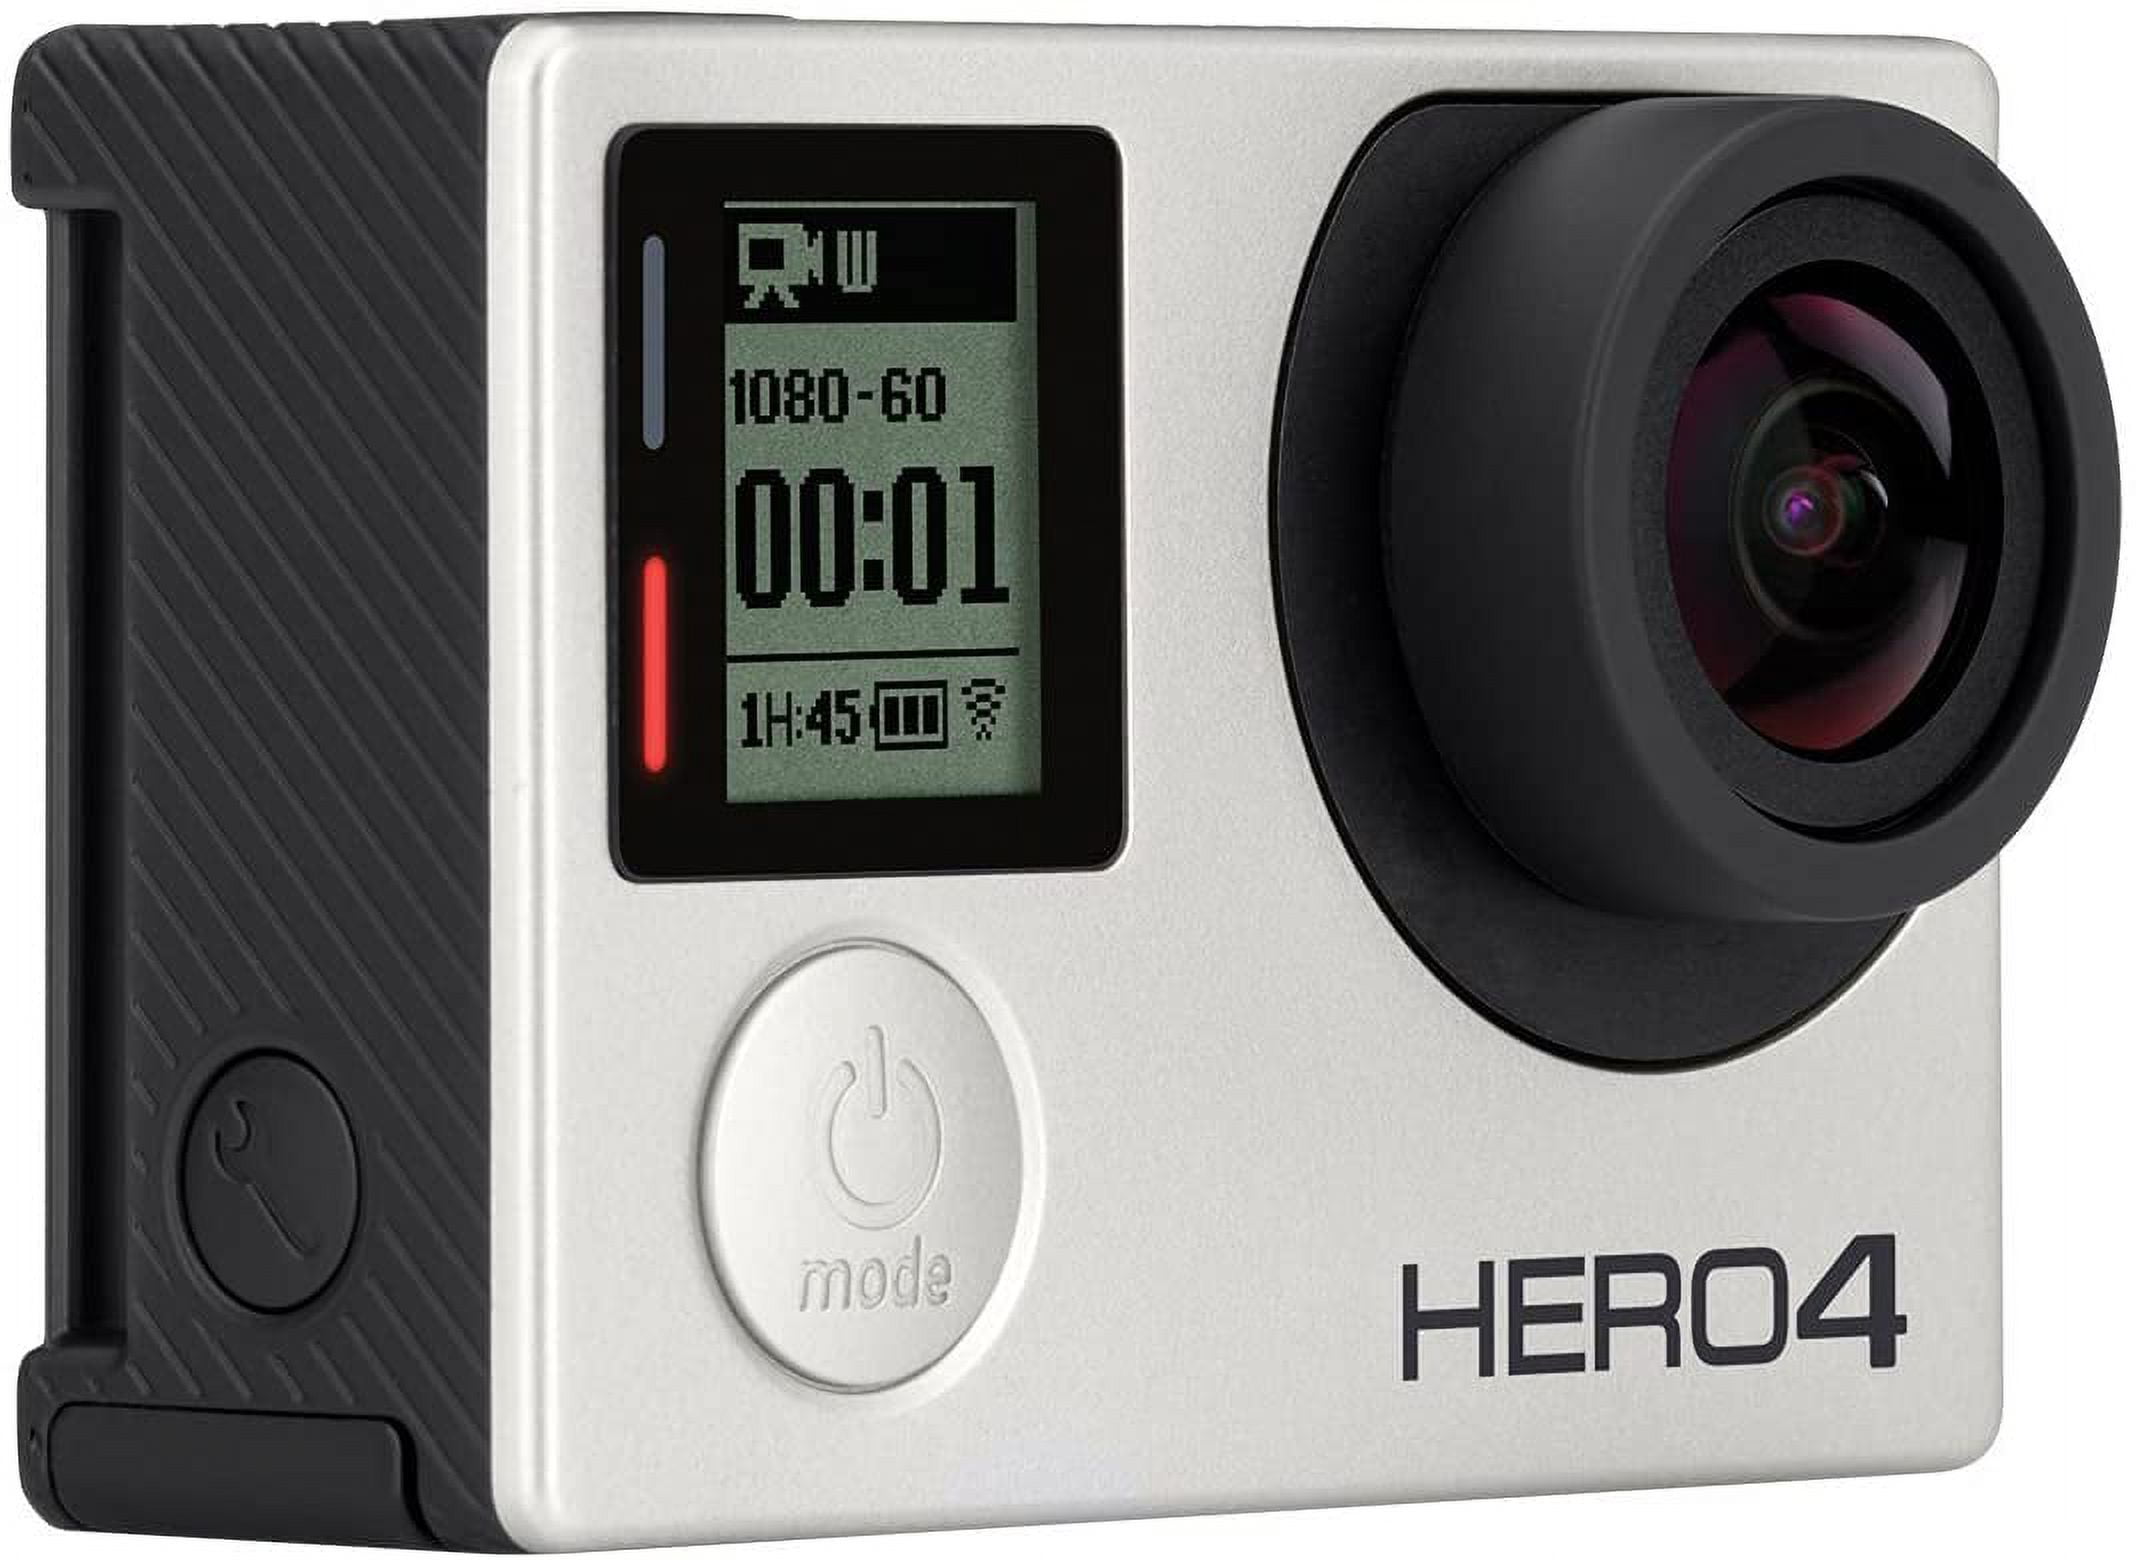 Gopro Hero 4 BLACK Edition 4K Action Camera Camcorder CHDHX-401